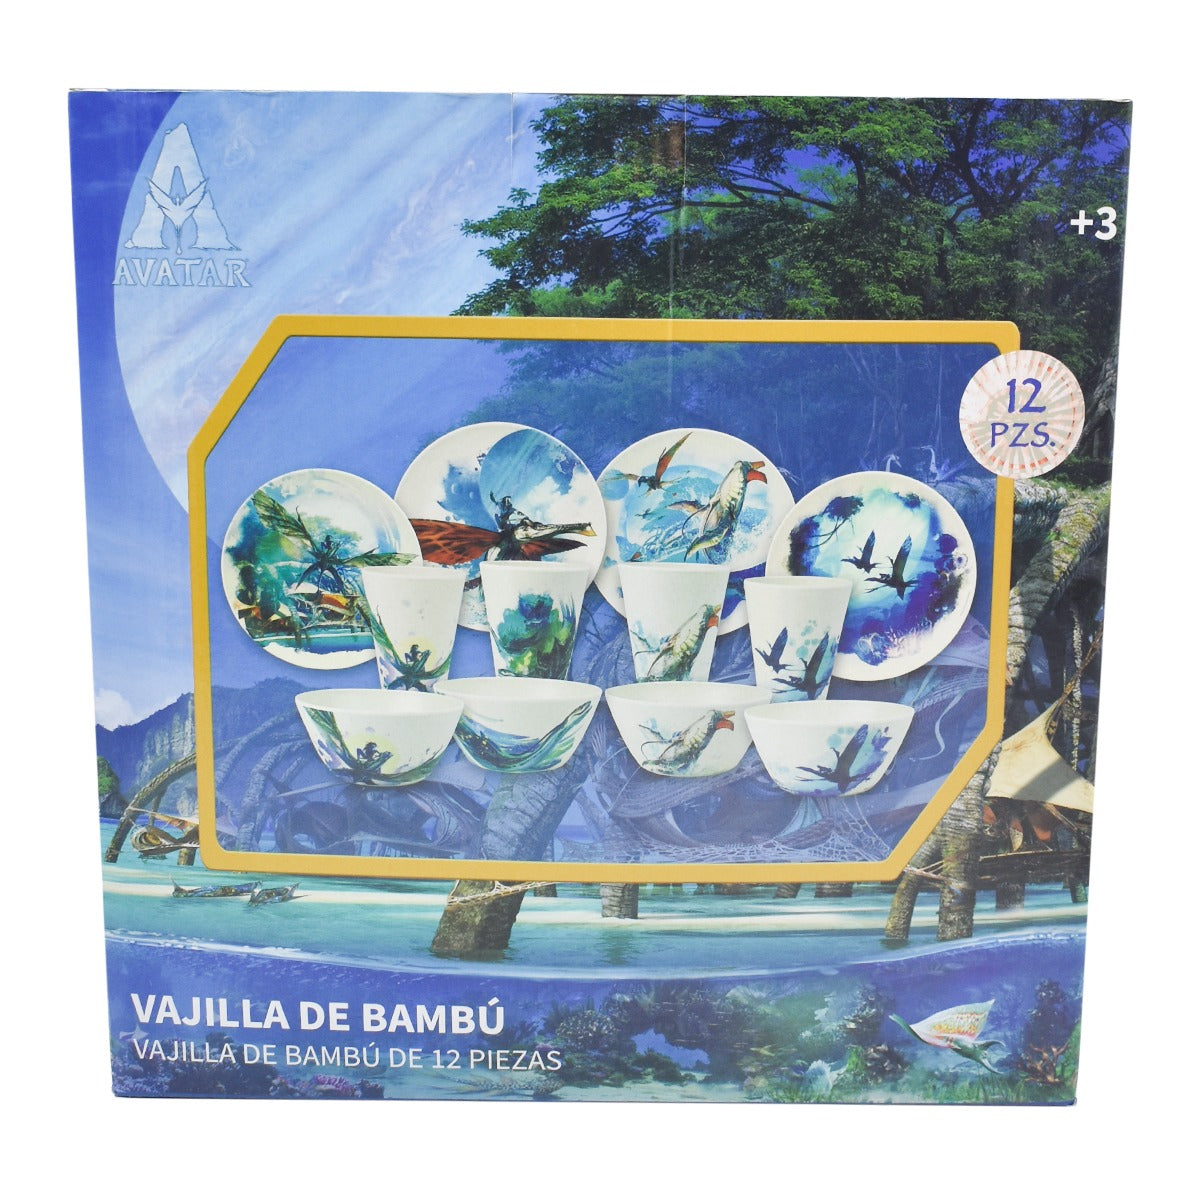 Set de Vajilla Familiar Ecológica de Bambú, Disney Avatar: El Sentido del Agua